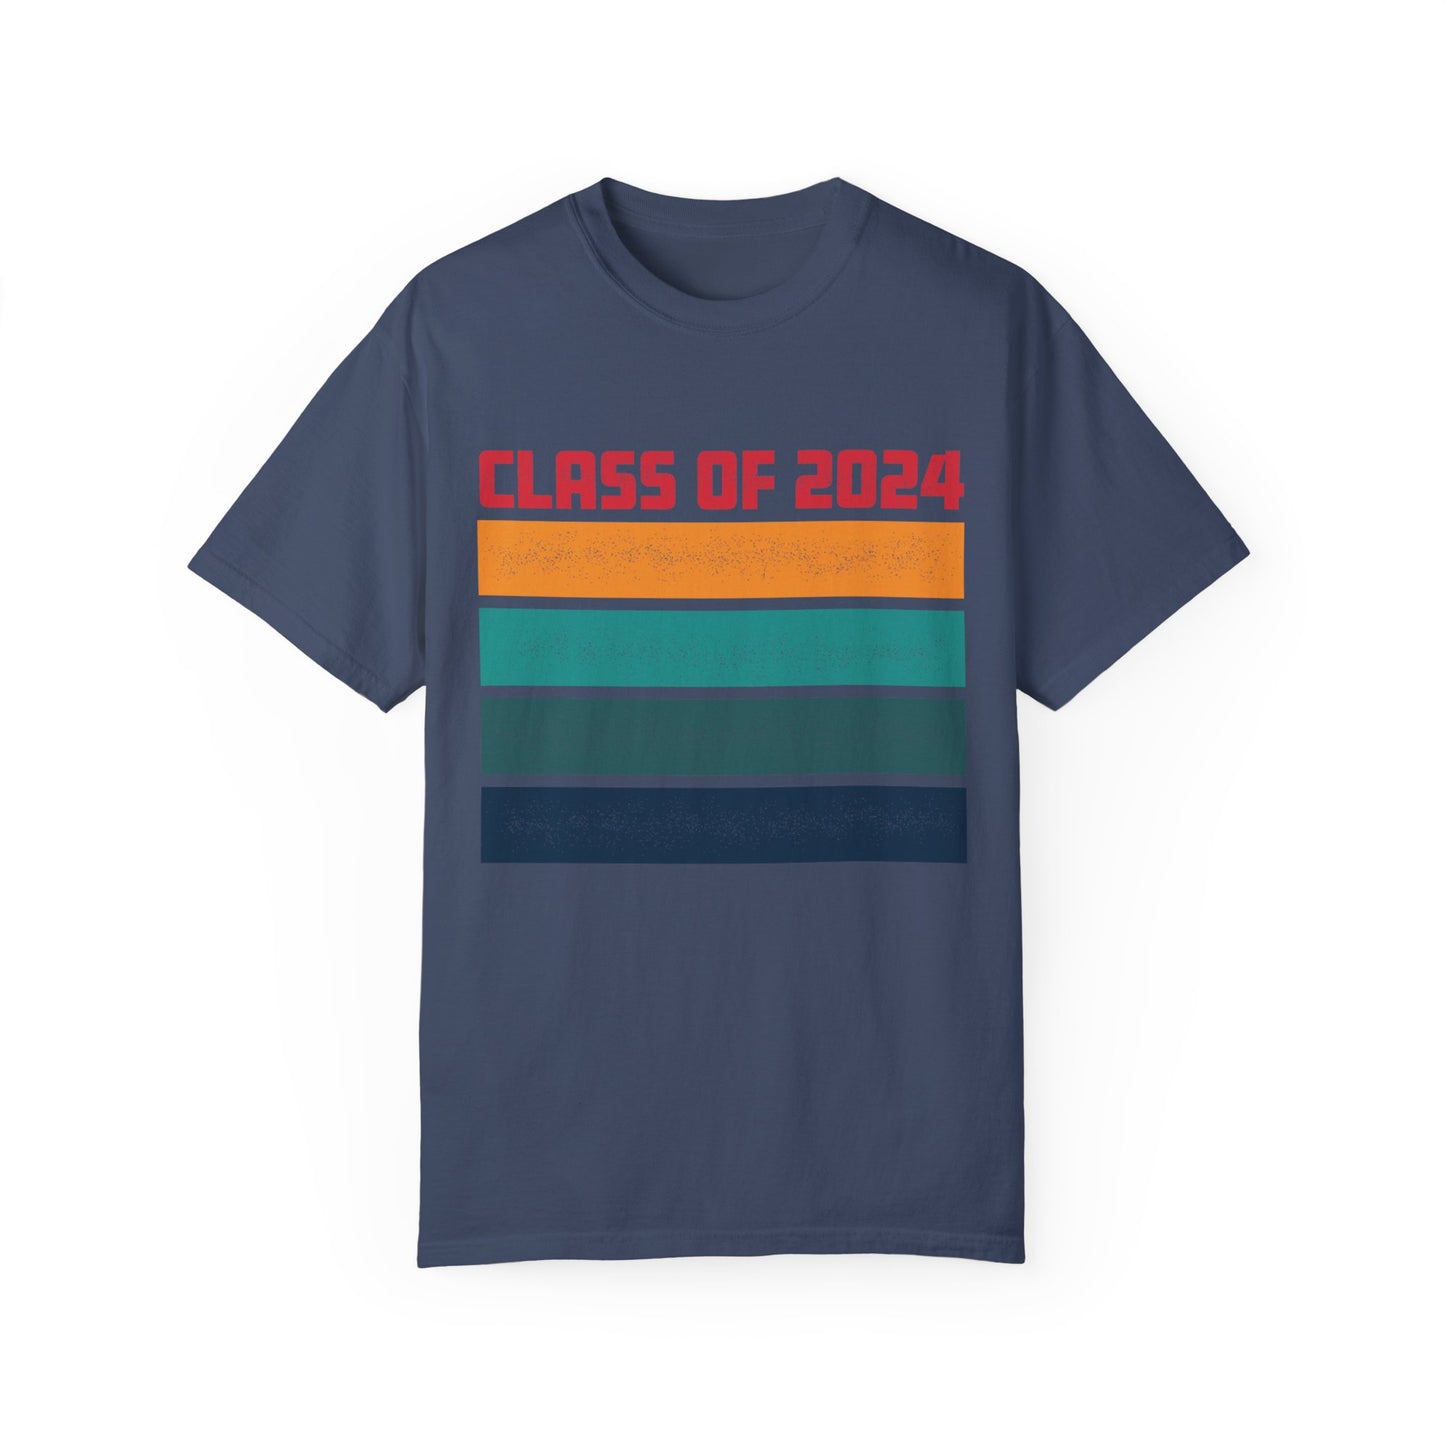 Graduation Gift, Class of 2024 Shirt, Retro Graduation Shirt, Gift for Granddaughter, Daughter, High School, College, University Graduation